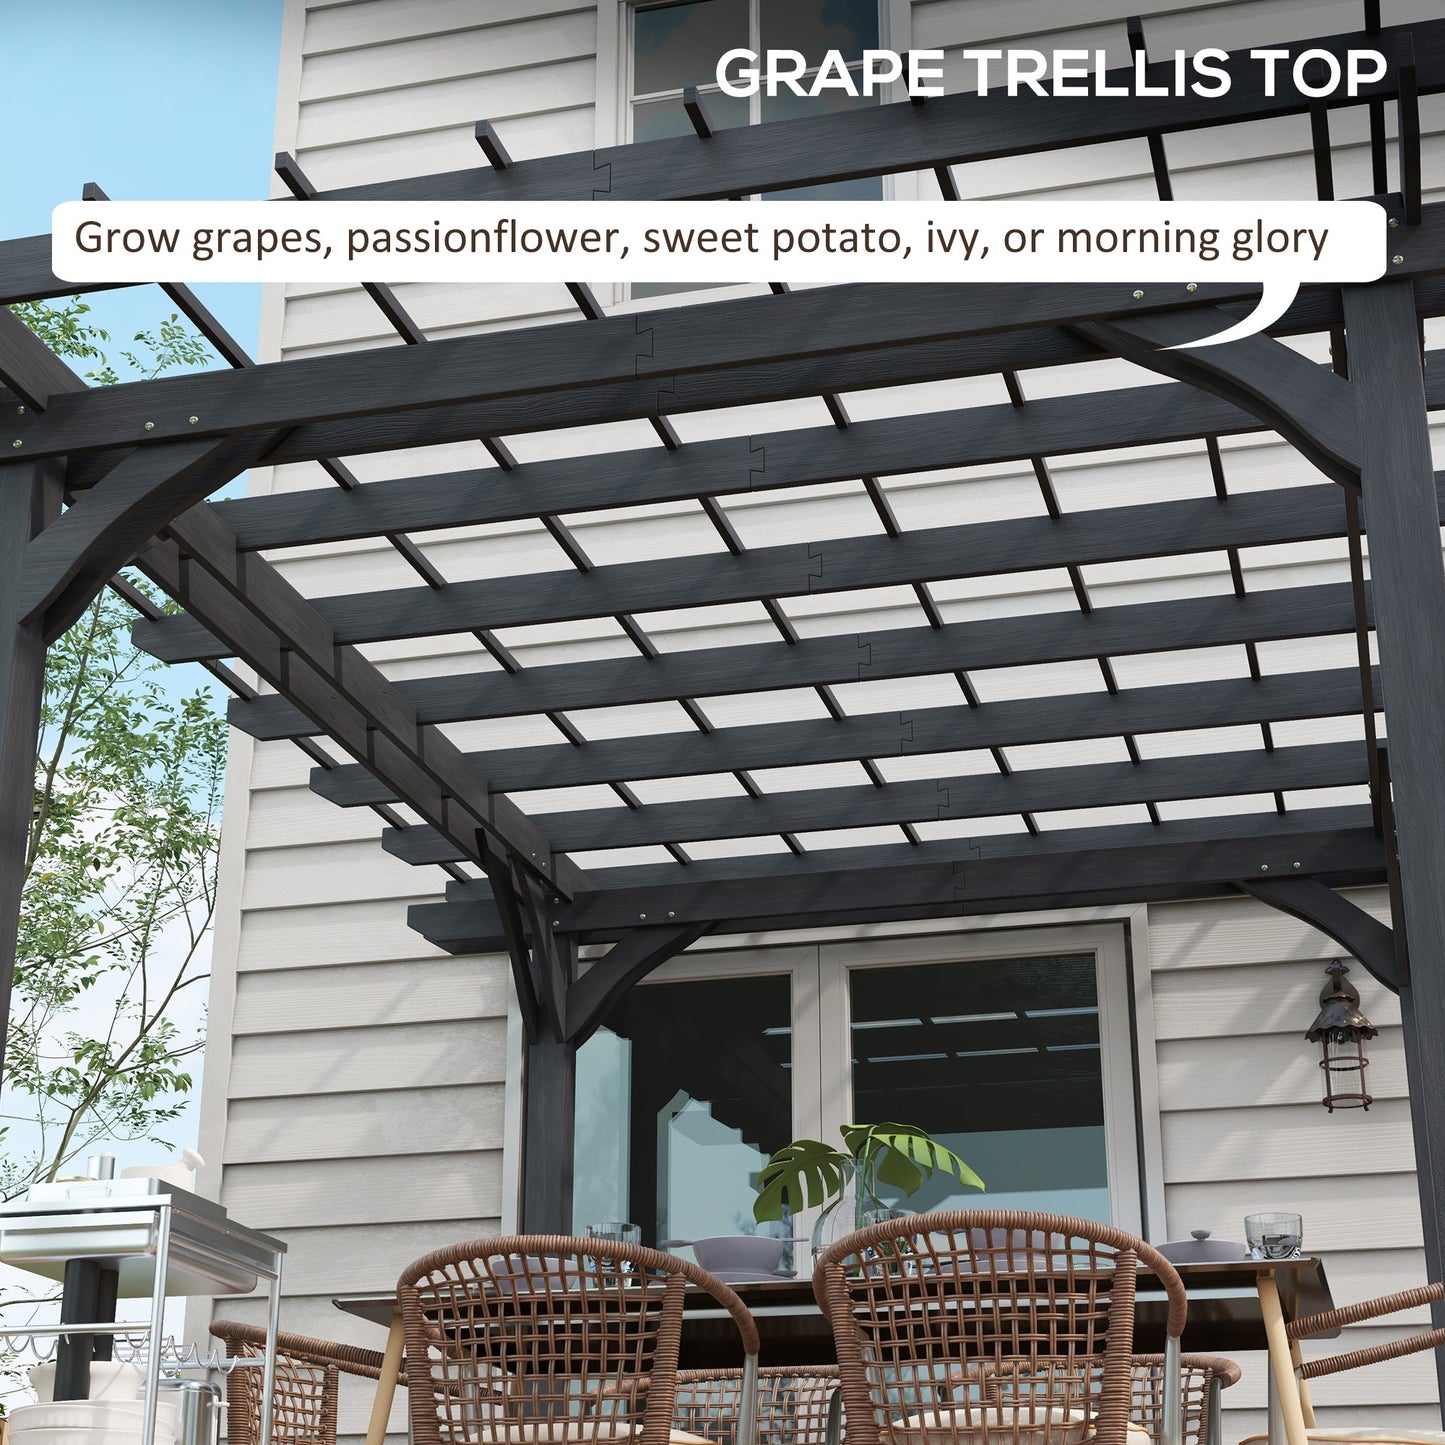 -Outsunny 12' x 10' Wooden Pergola Grape Trellis Outdoor Gazebo with Stable Structure for Garden, Patio, Backyard, Deck, Gray - Outdoor Style Company